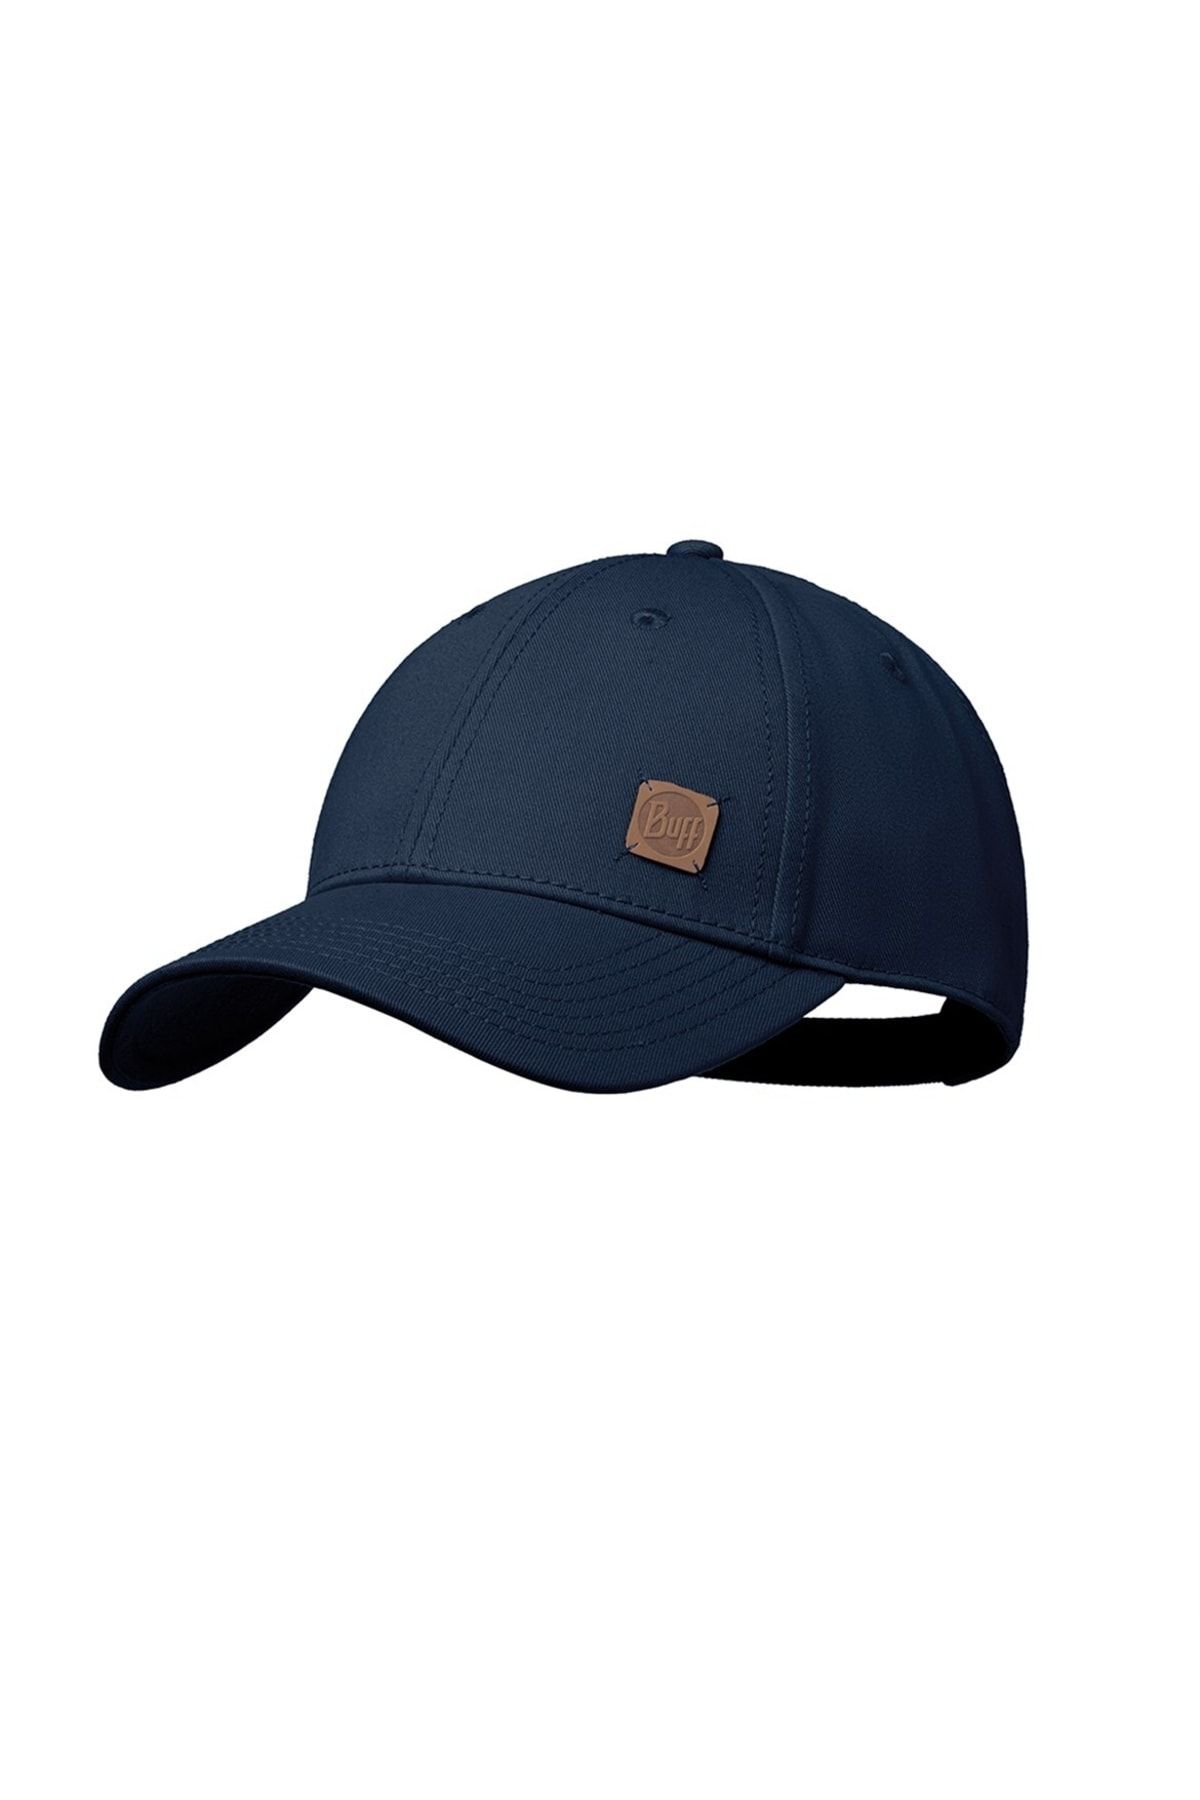 Buff ® Baseball Cap Solıd Navy